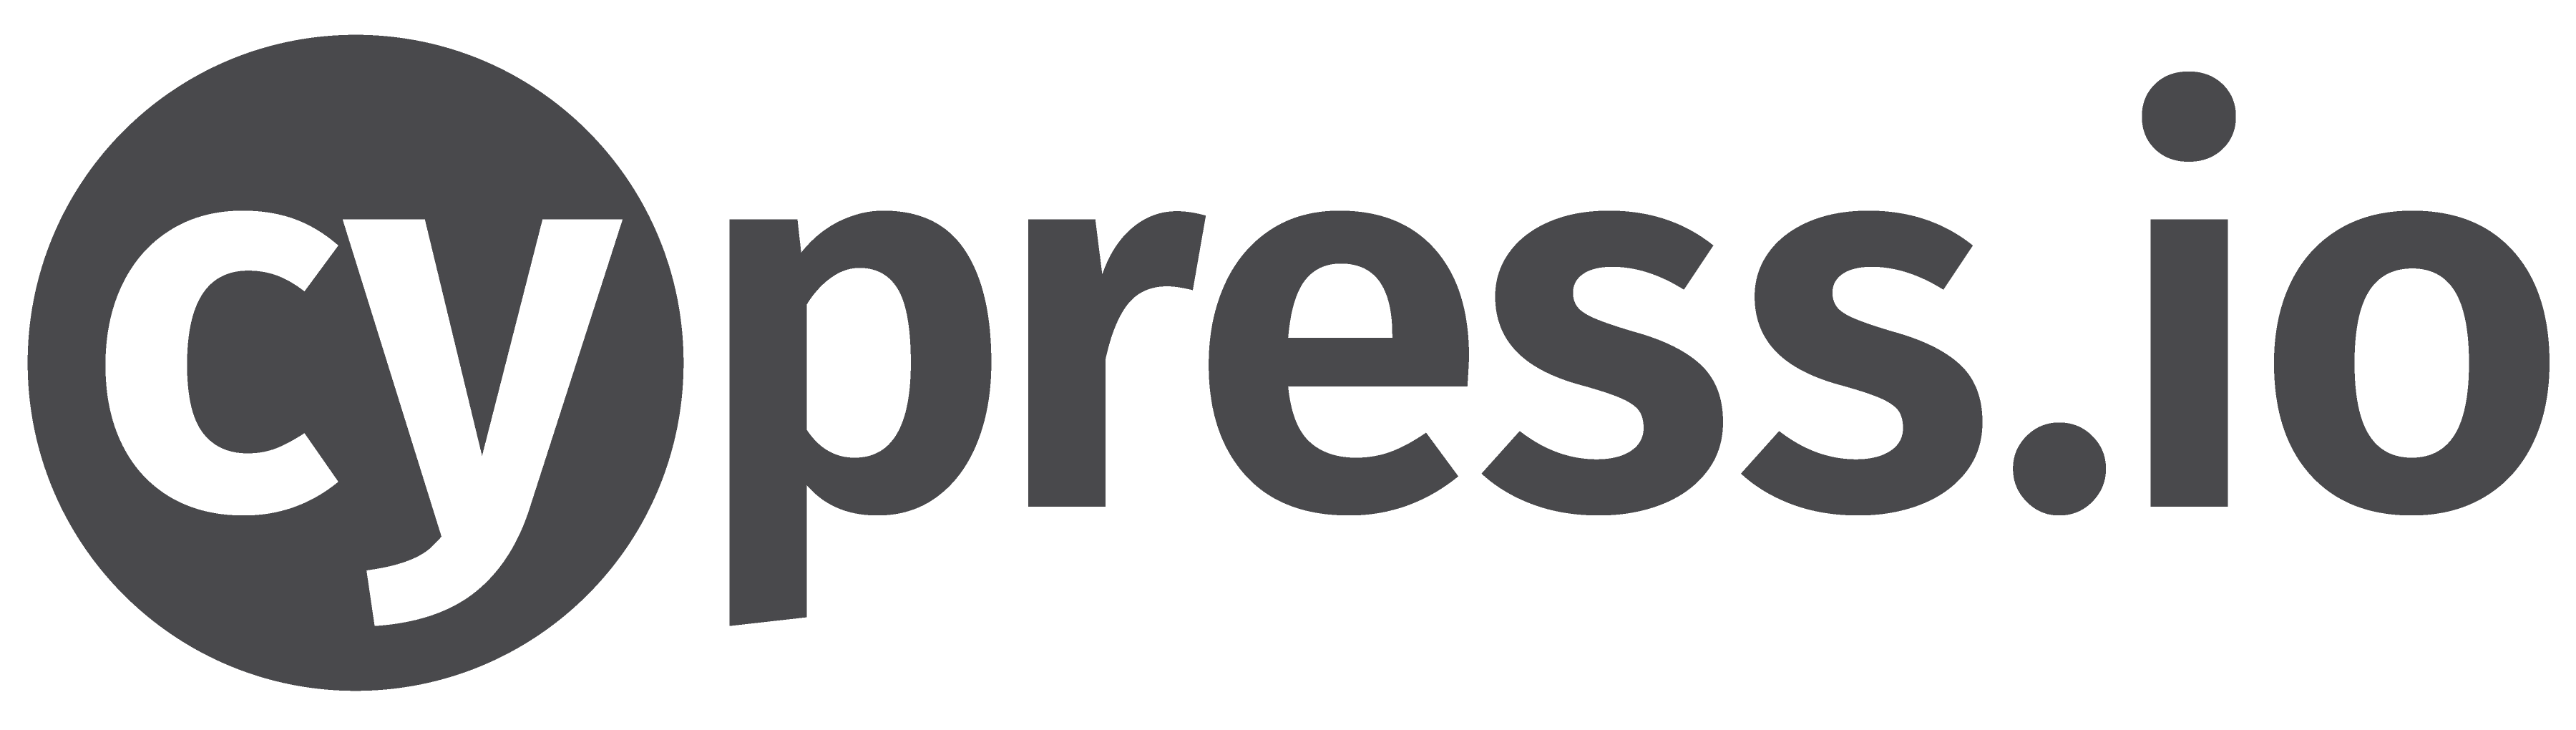 Cypress.io Logo (2).png